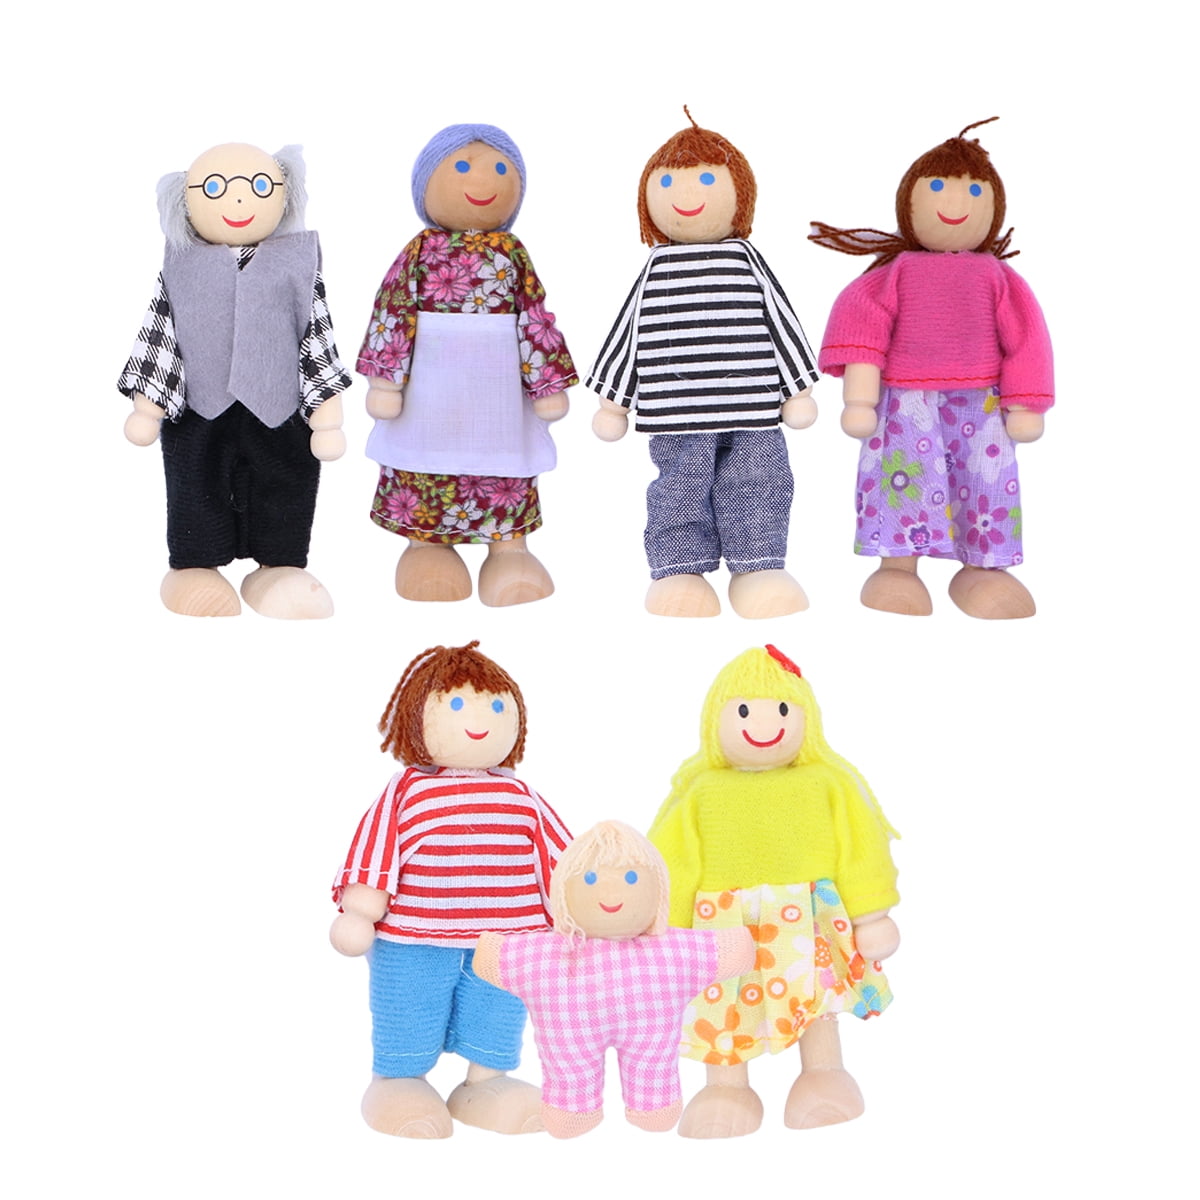 7pcs Mini House Figure Toy Kids Wooden Dolls Family Pretend Play Set Gift 